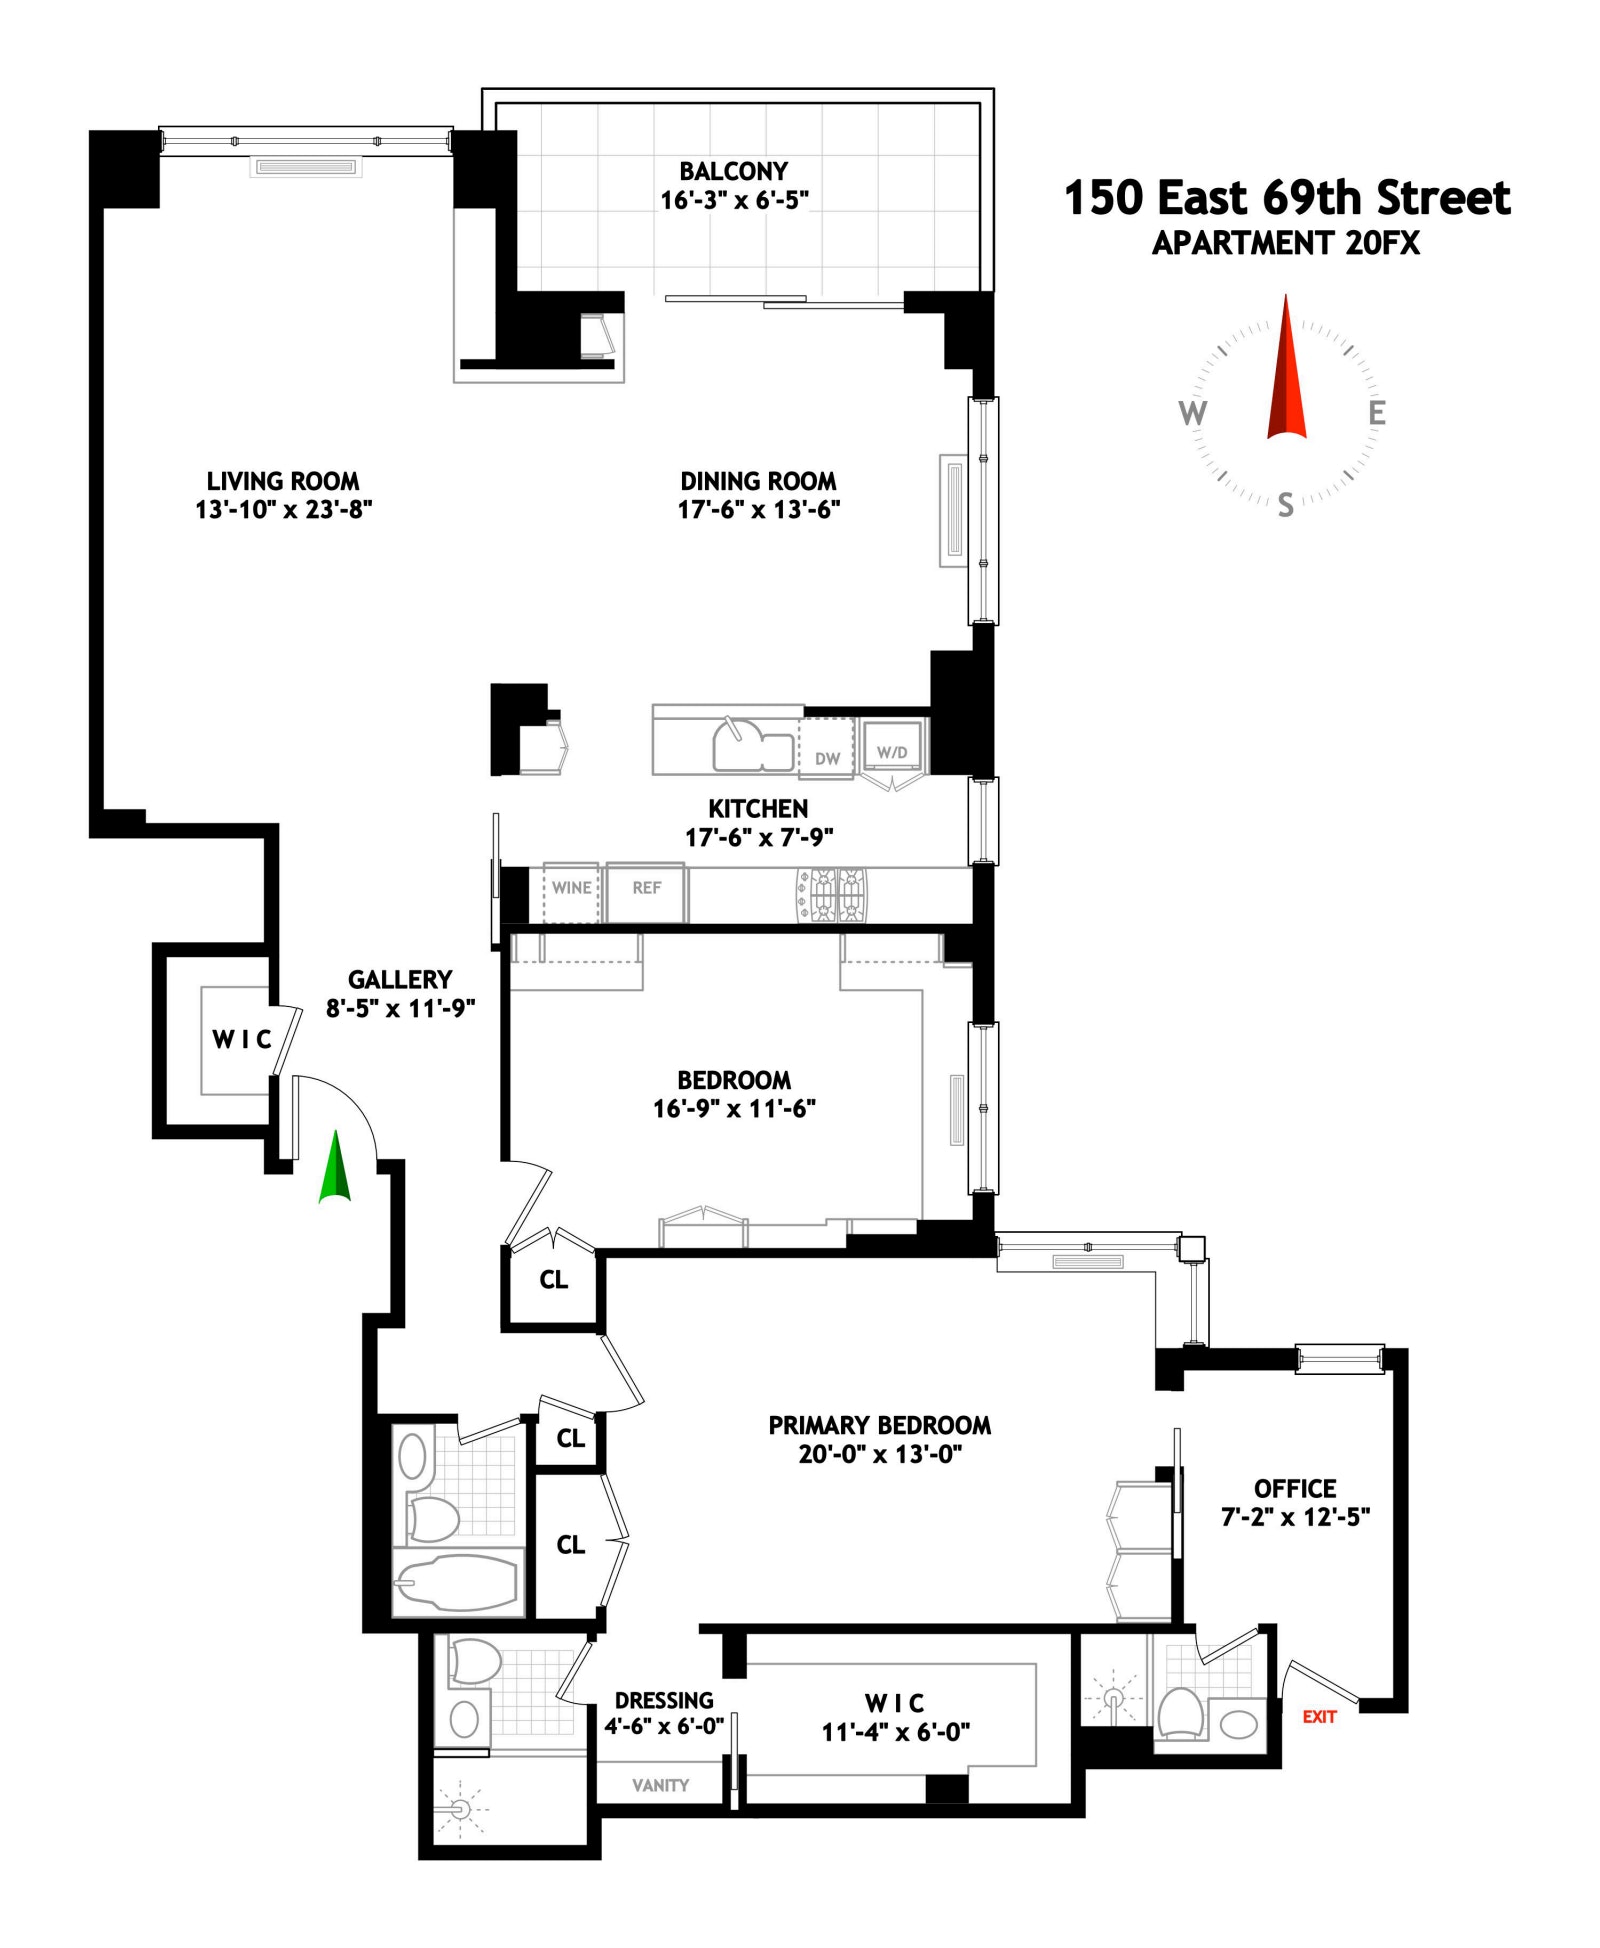 Floorplan for 150 East 69th Street, 20FX